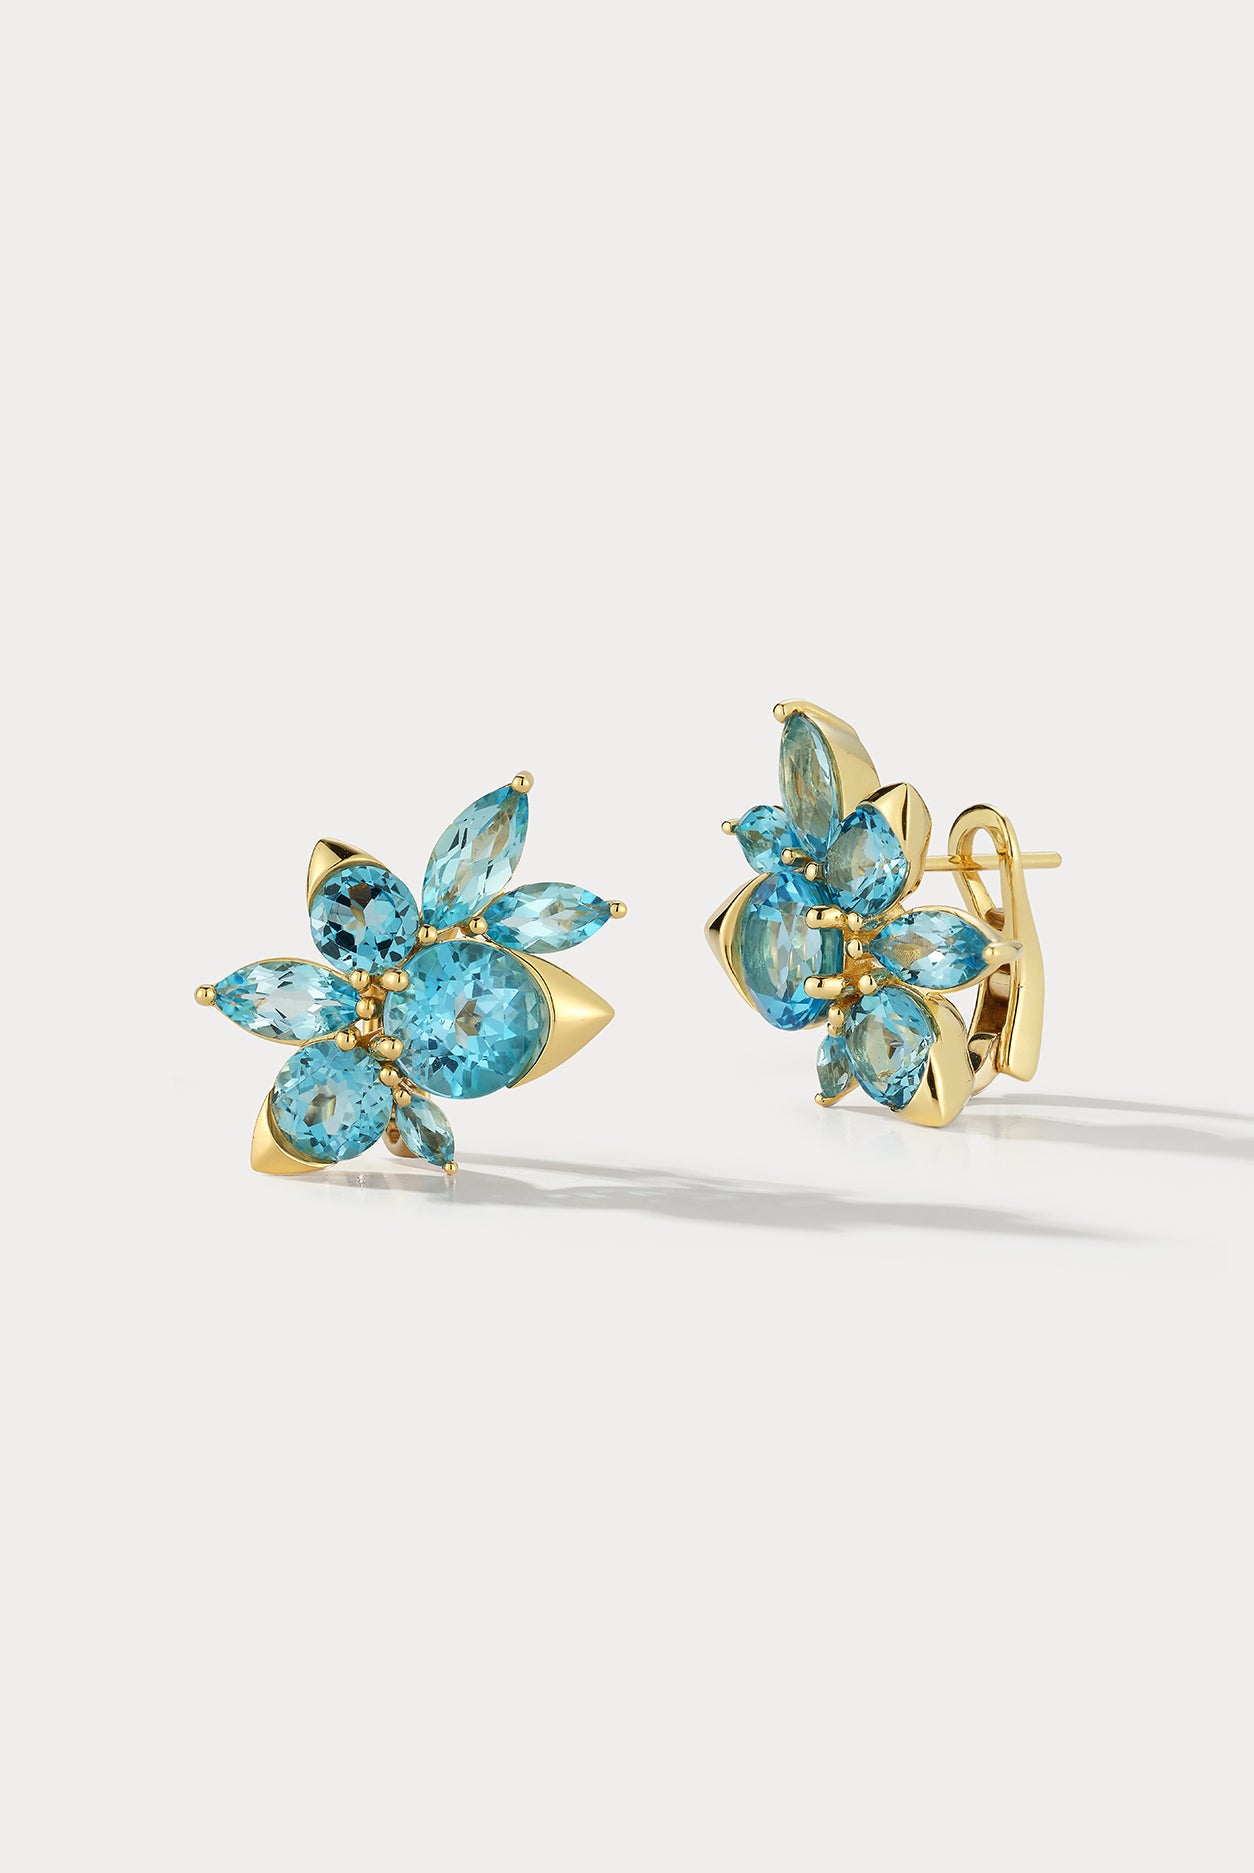 Blue Topaz YELLOW GOLD Cluster Earrings - Ammrada